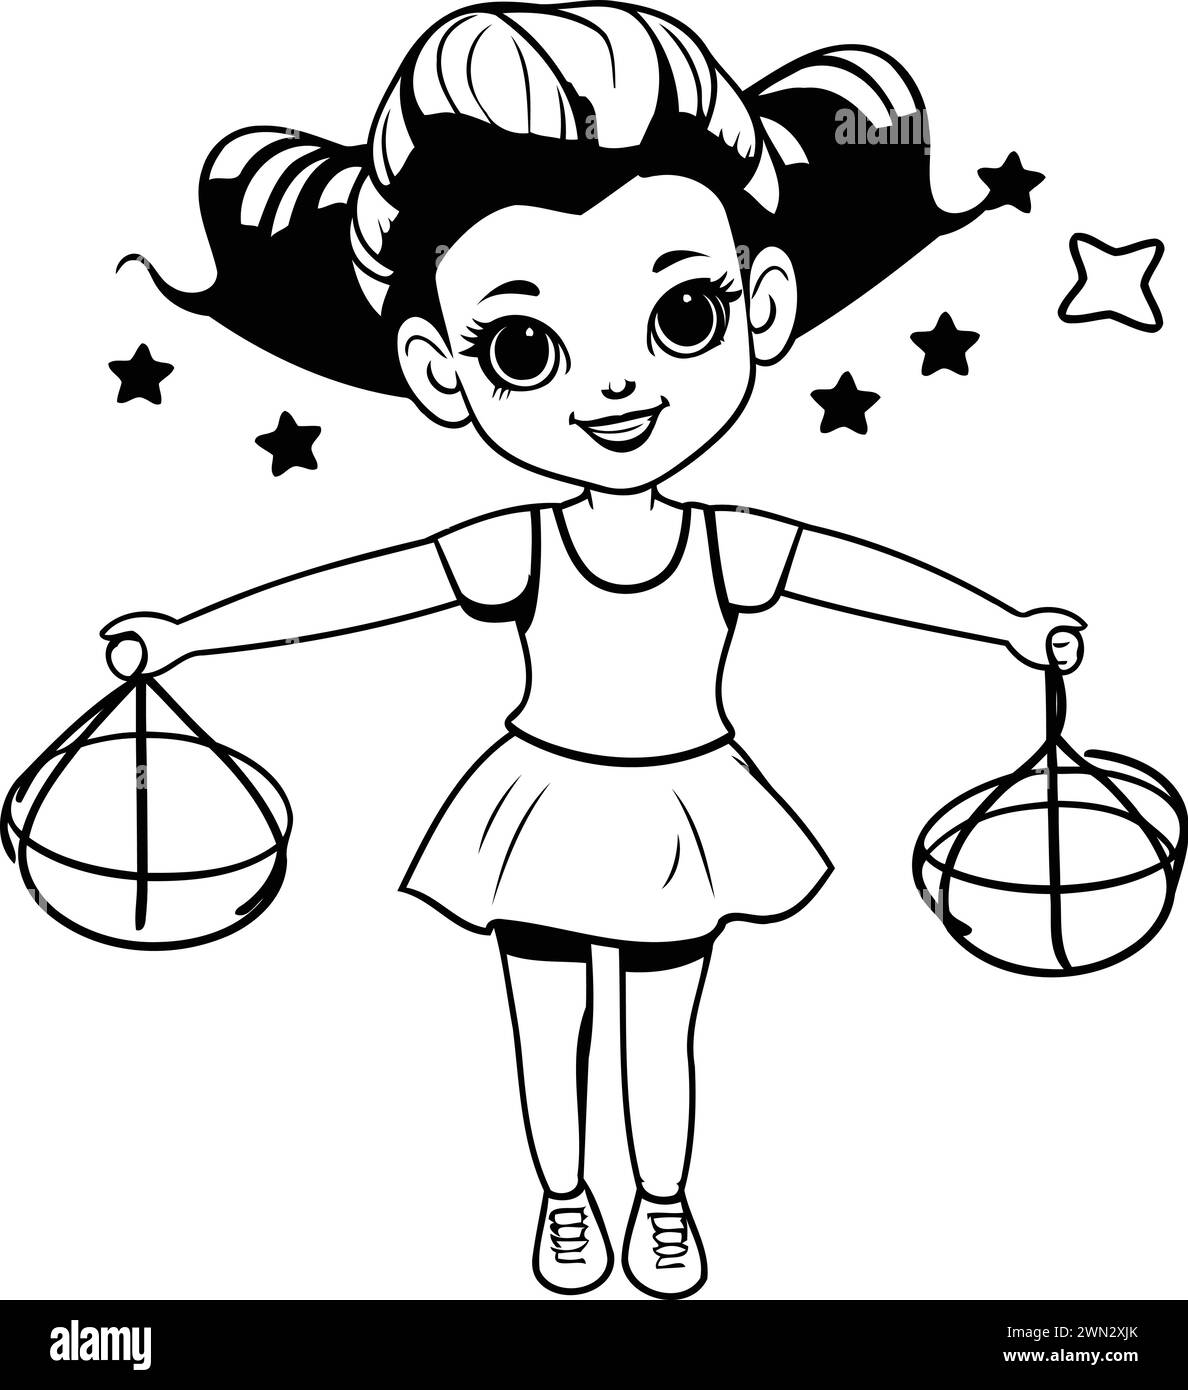 cute little girl with justice scale vector illustration designicon vector illustration graphic design Stock Vector